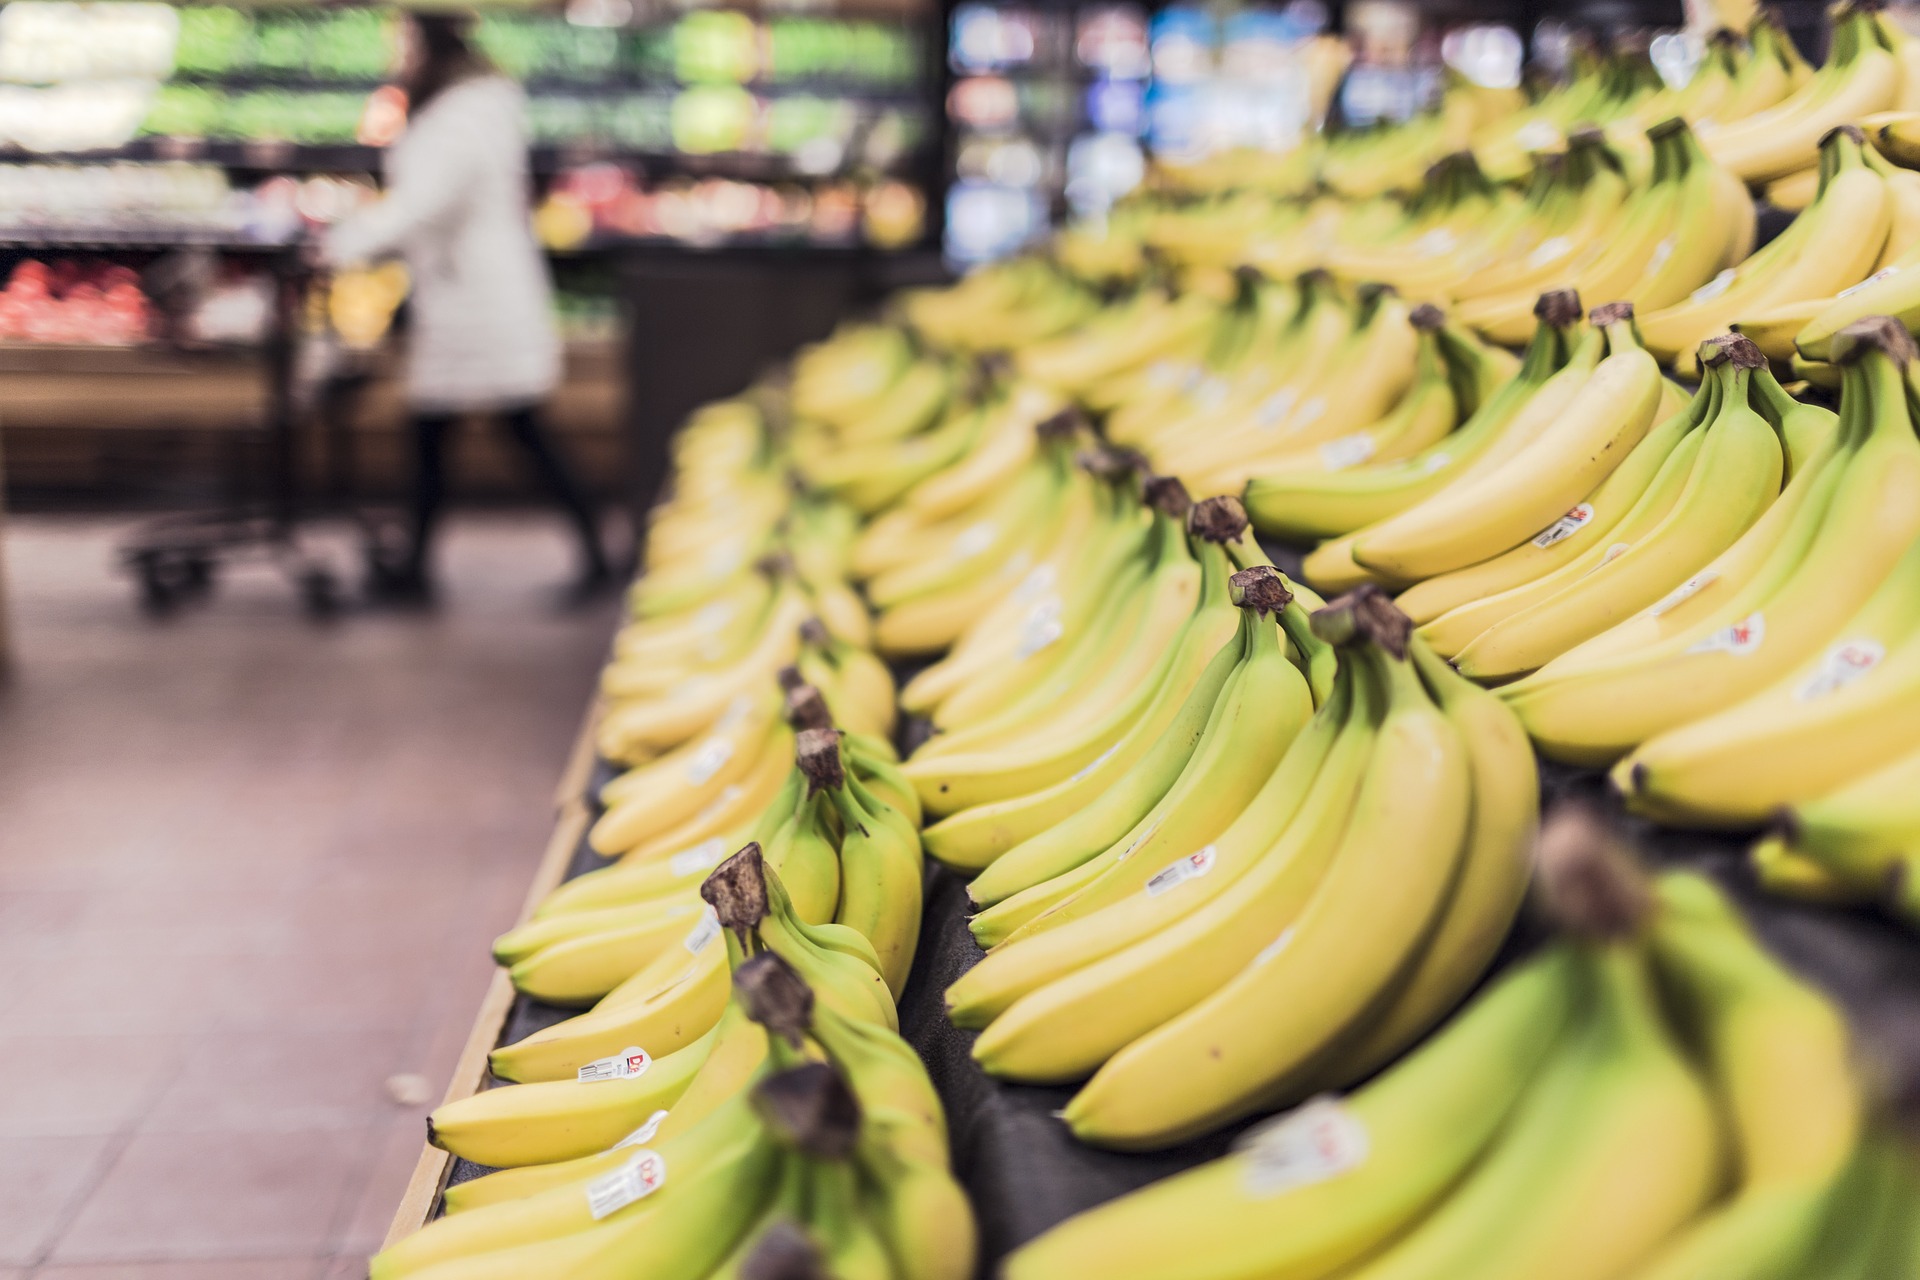 UK finally plans to scrap EU curvy banana law